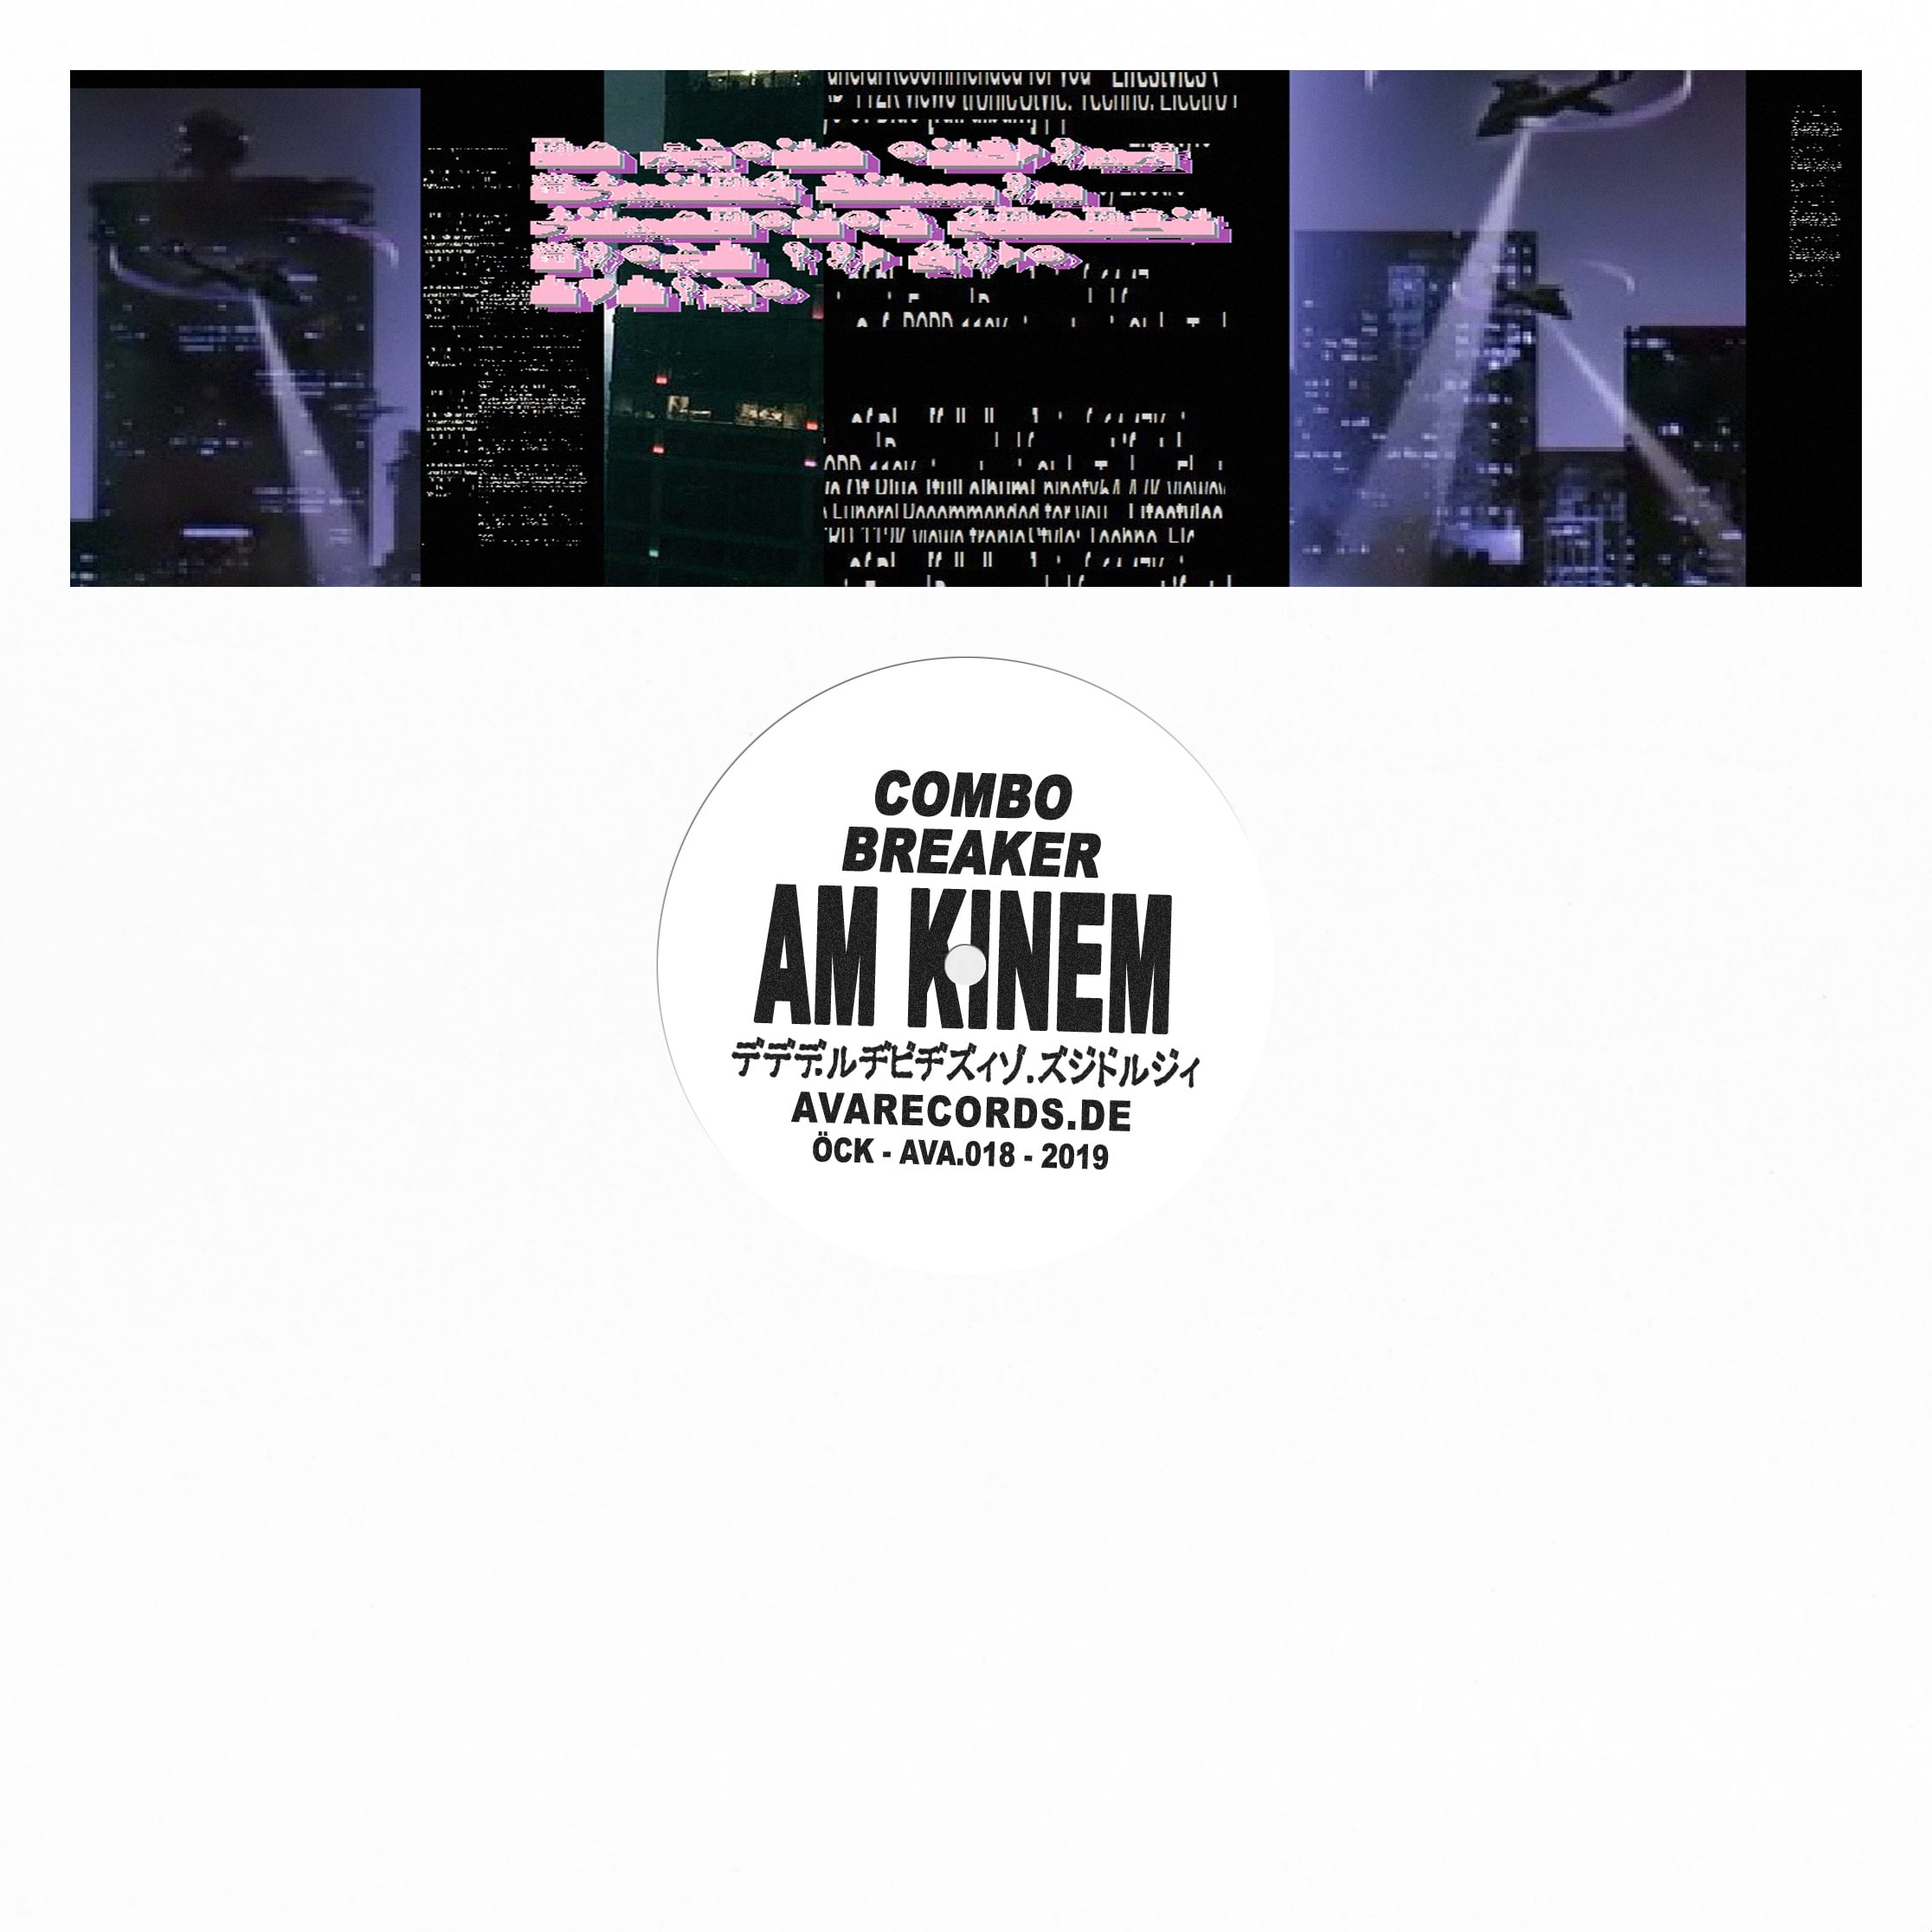 Am Kinem - Combo Breaker - AVA018 - AVA RECORDS